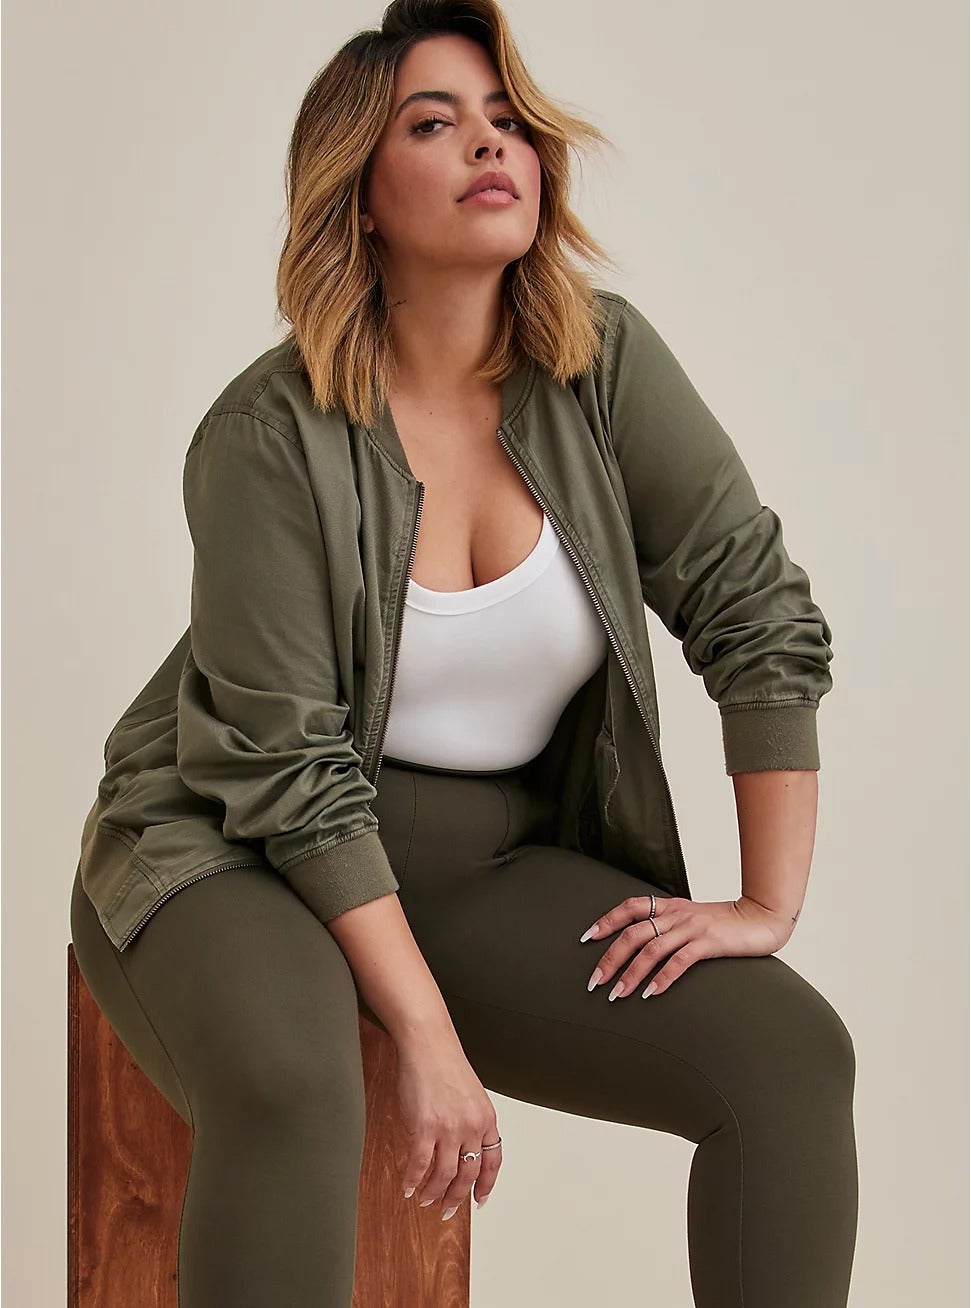 model sitting down, wearing hunter green twill bomber jacket